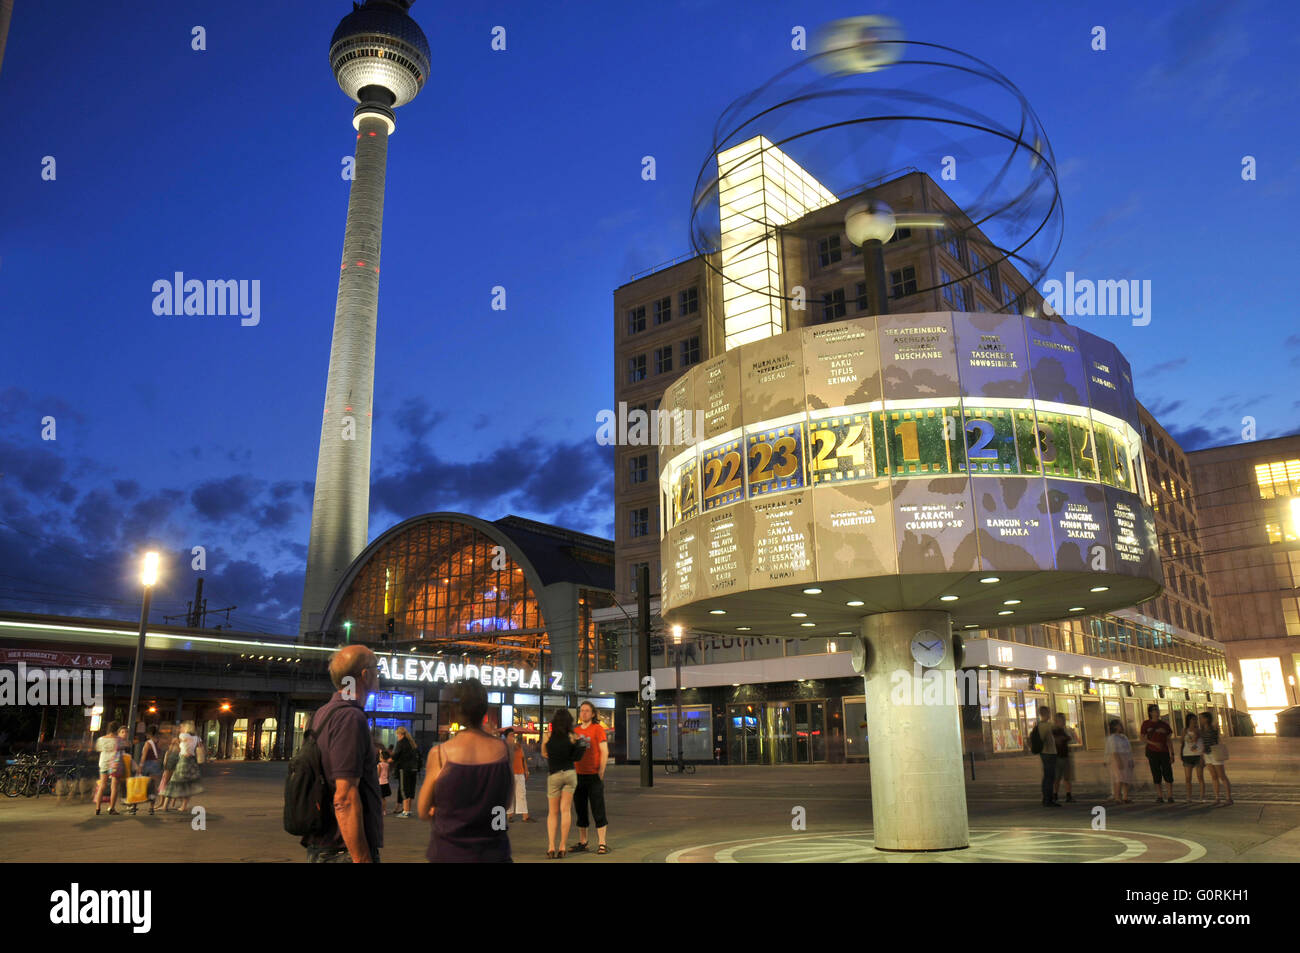 Urania-Weltzeituhr, Berlin Alexanderplatz station, Fernsehturm Berlin Alexanderplatz, Mitte, Berlin, Deutschland / Fernsehturm, Alexanderplatz Stockfoto